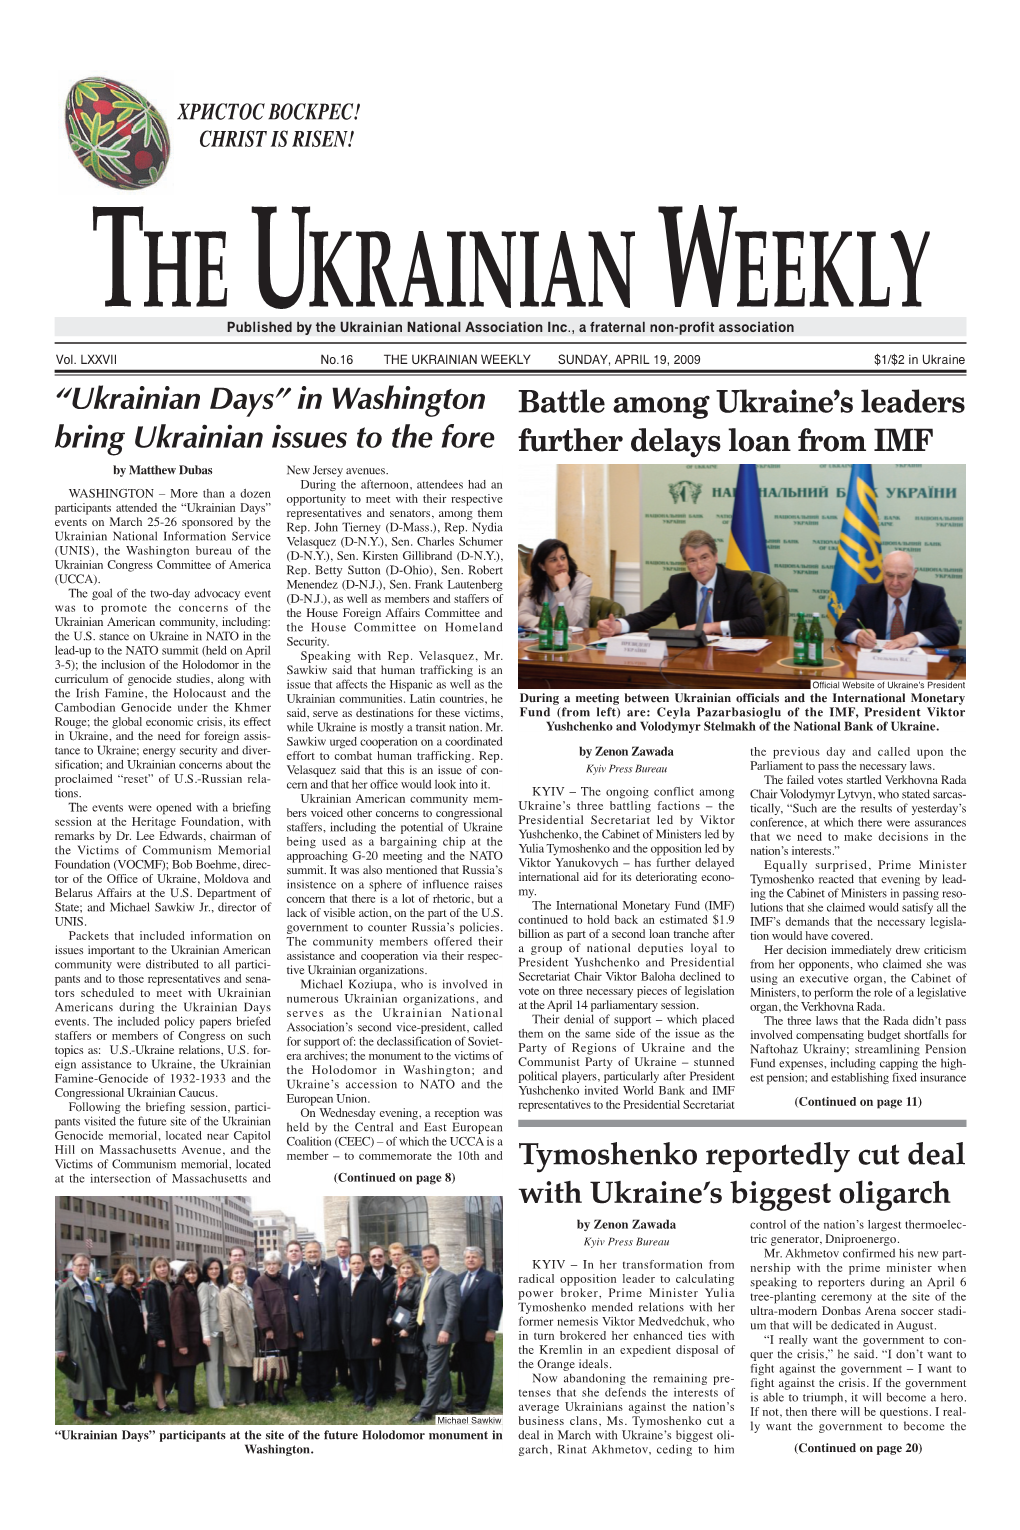 The Ukrainian Weekly 2009, No.16